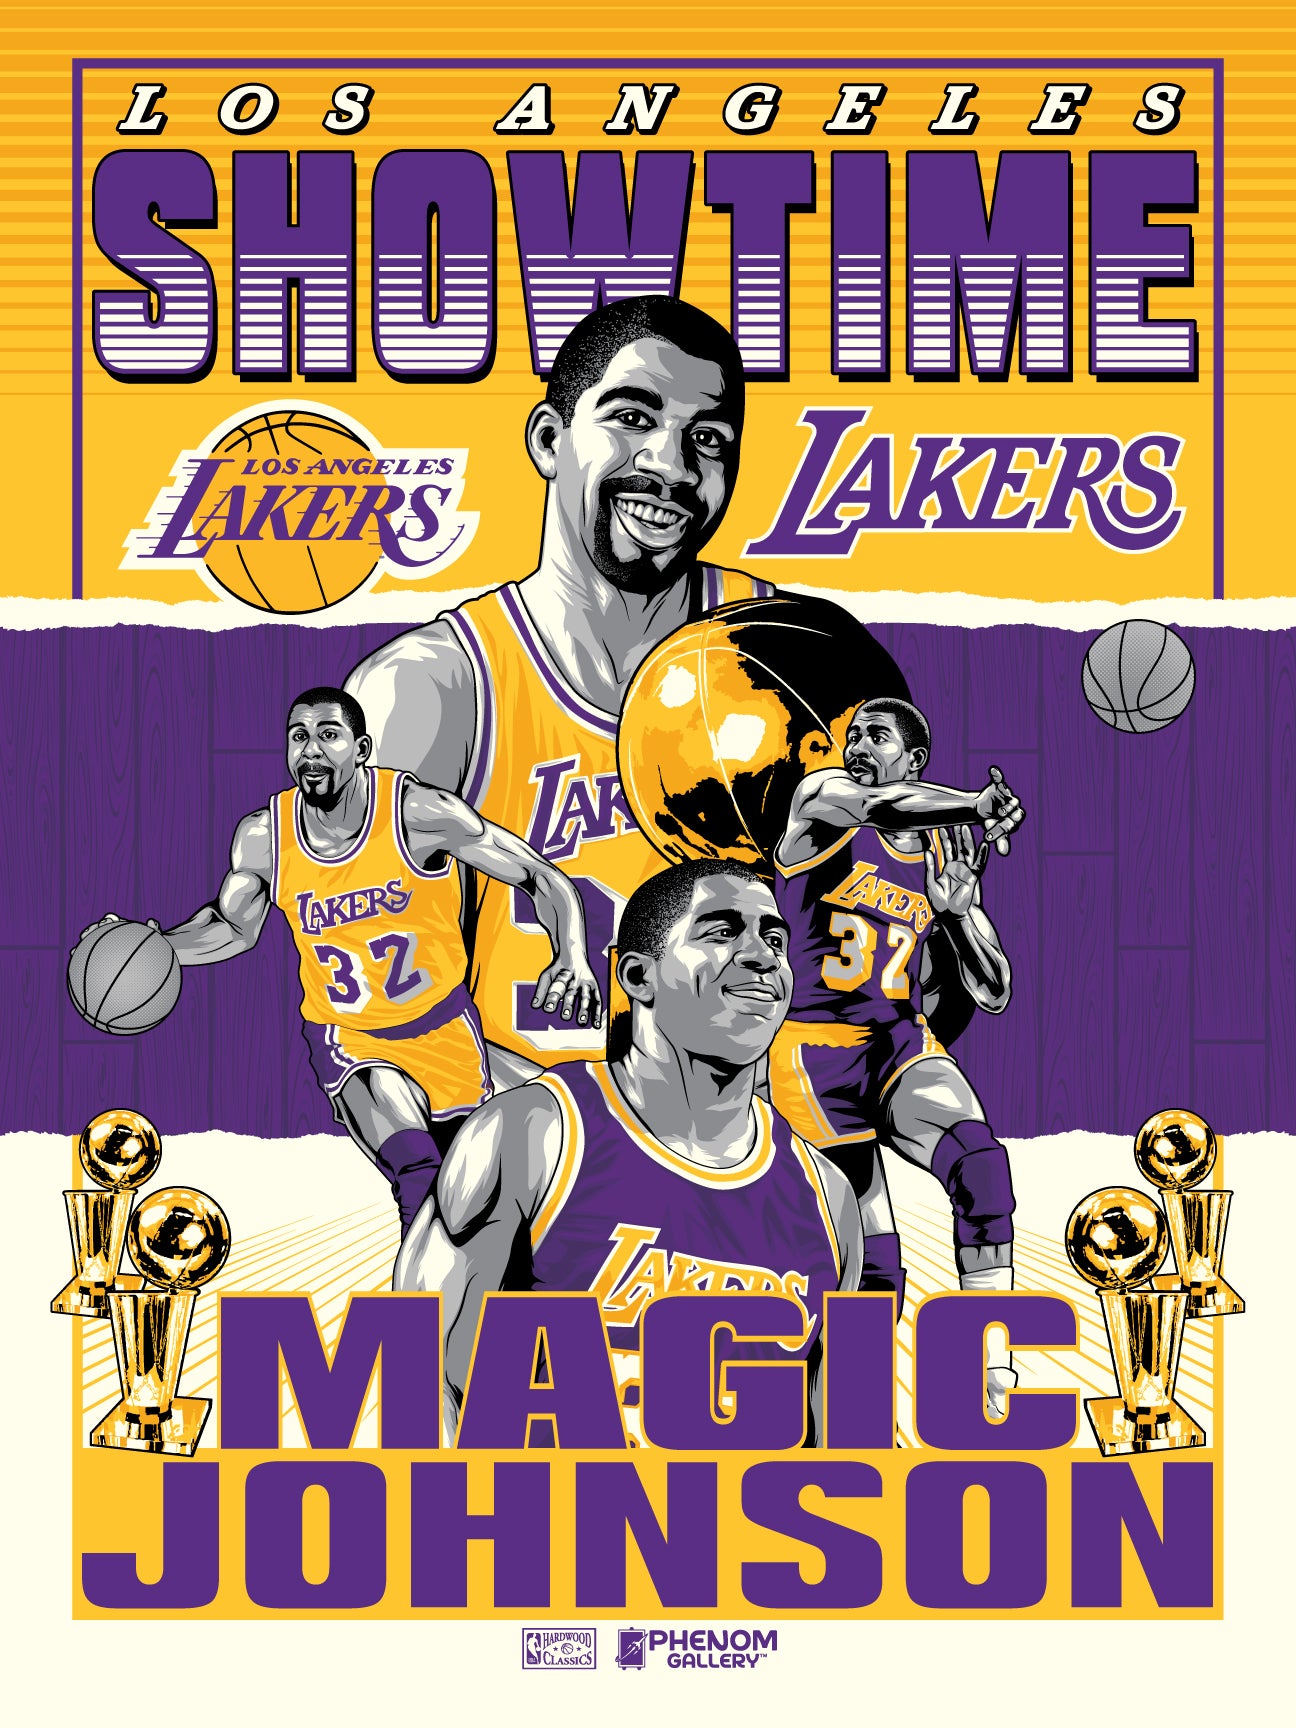 Magic Johnson Wallpaper: The Legend of Showtime